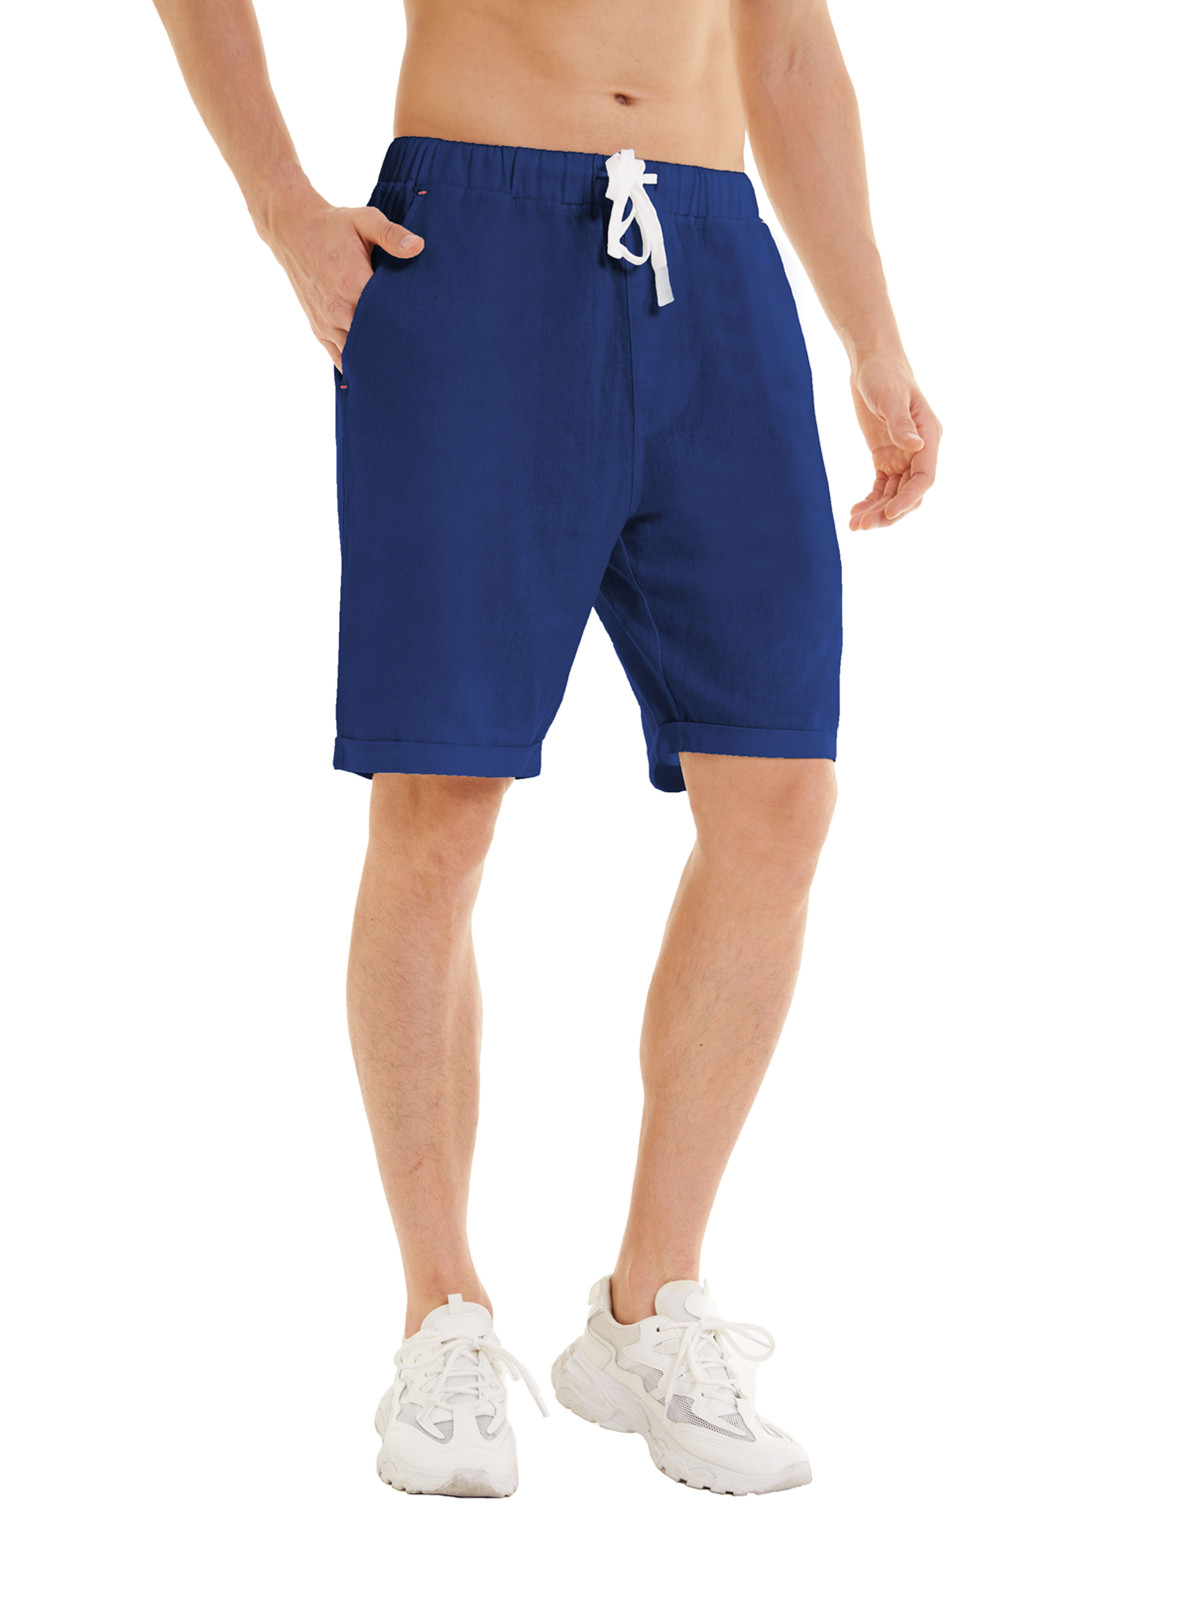 QPNGRP Men's Linen Cotton Casual Classic Fit Shorts Flat Front Drawstring Summer Beach Shorts with Pockets blue S